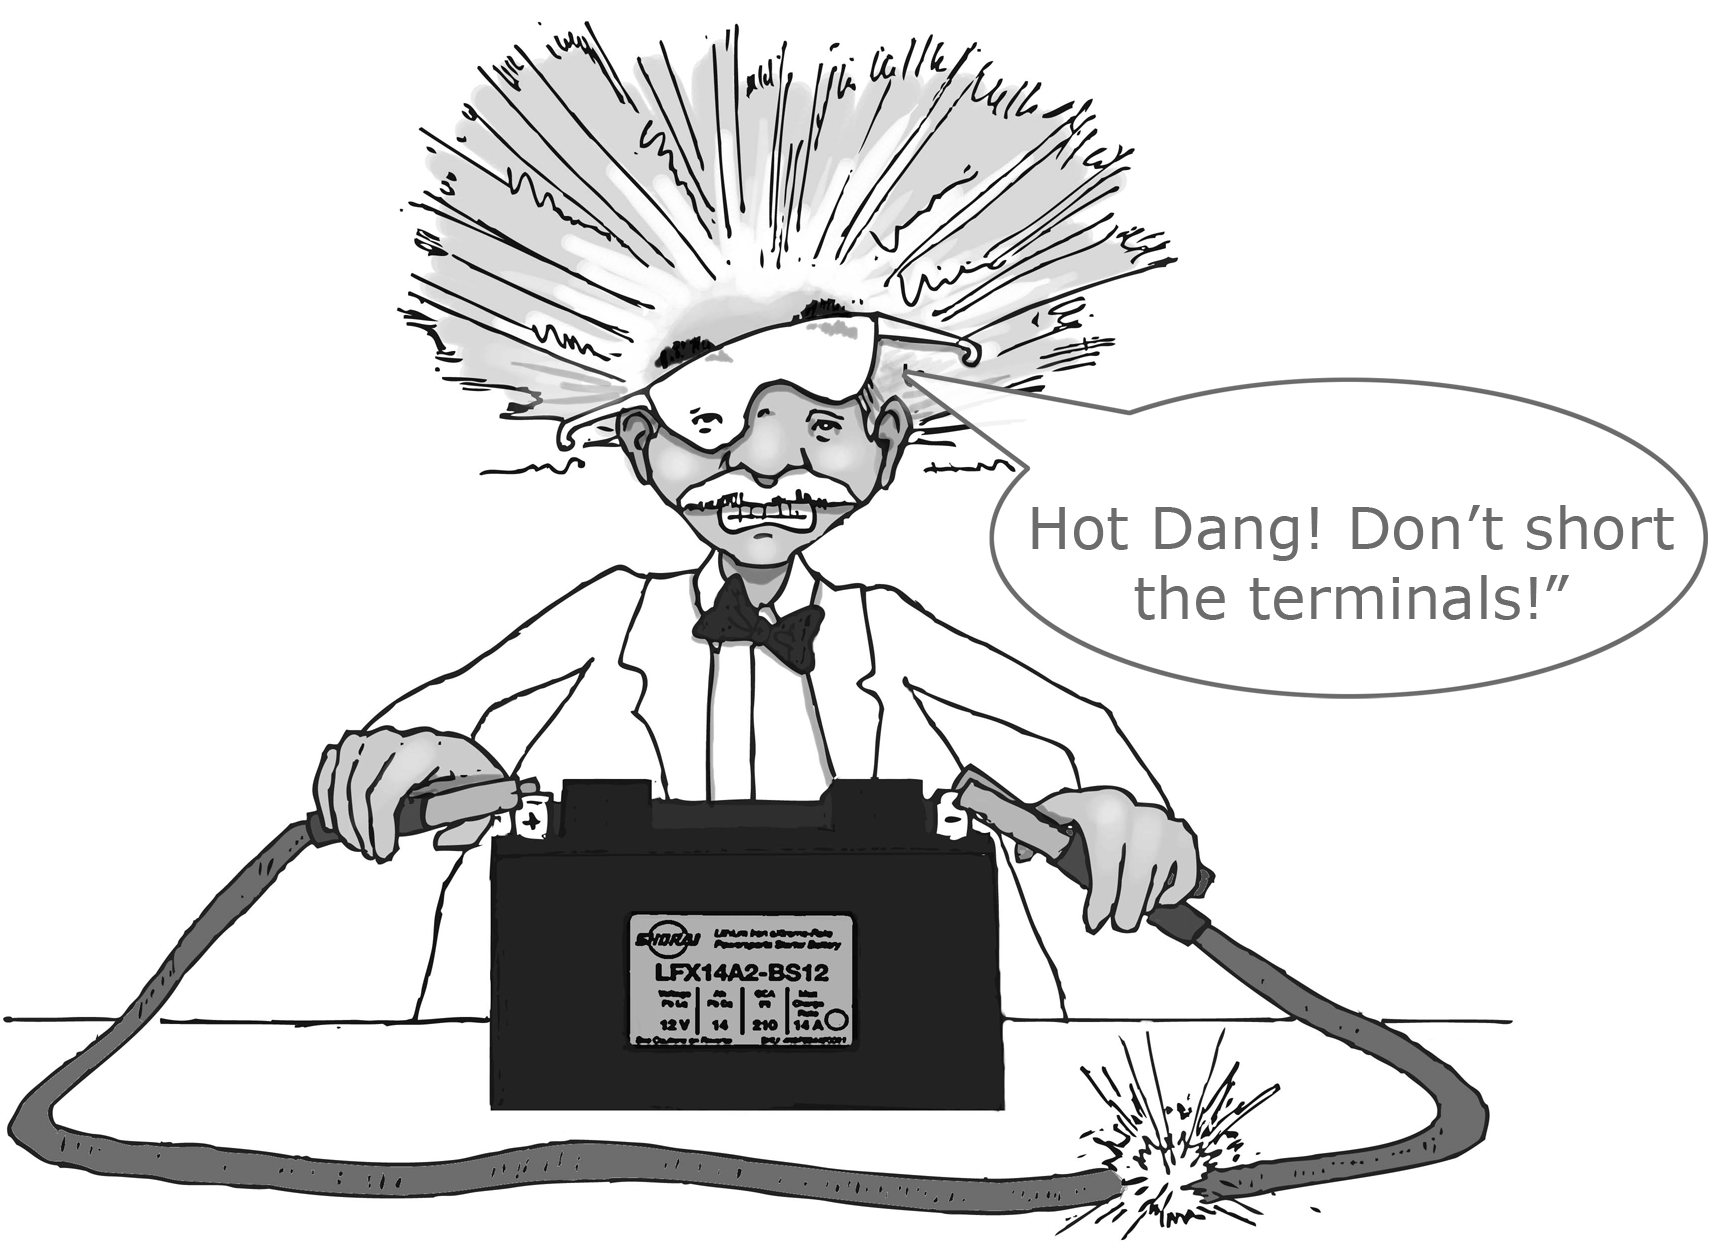 Dr Shock Says "Hot Dang!  Don't short the terminals!"